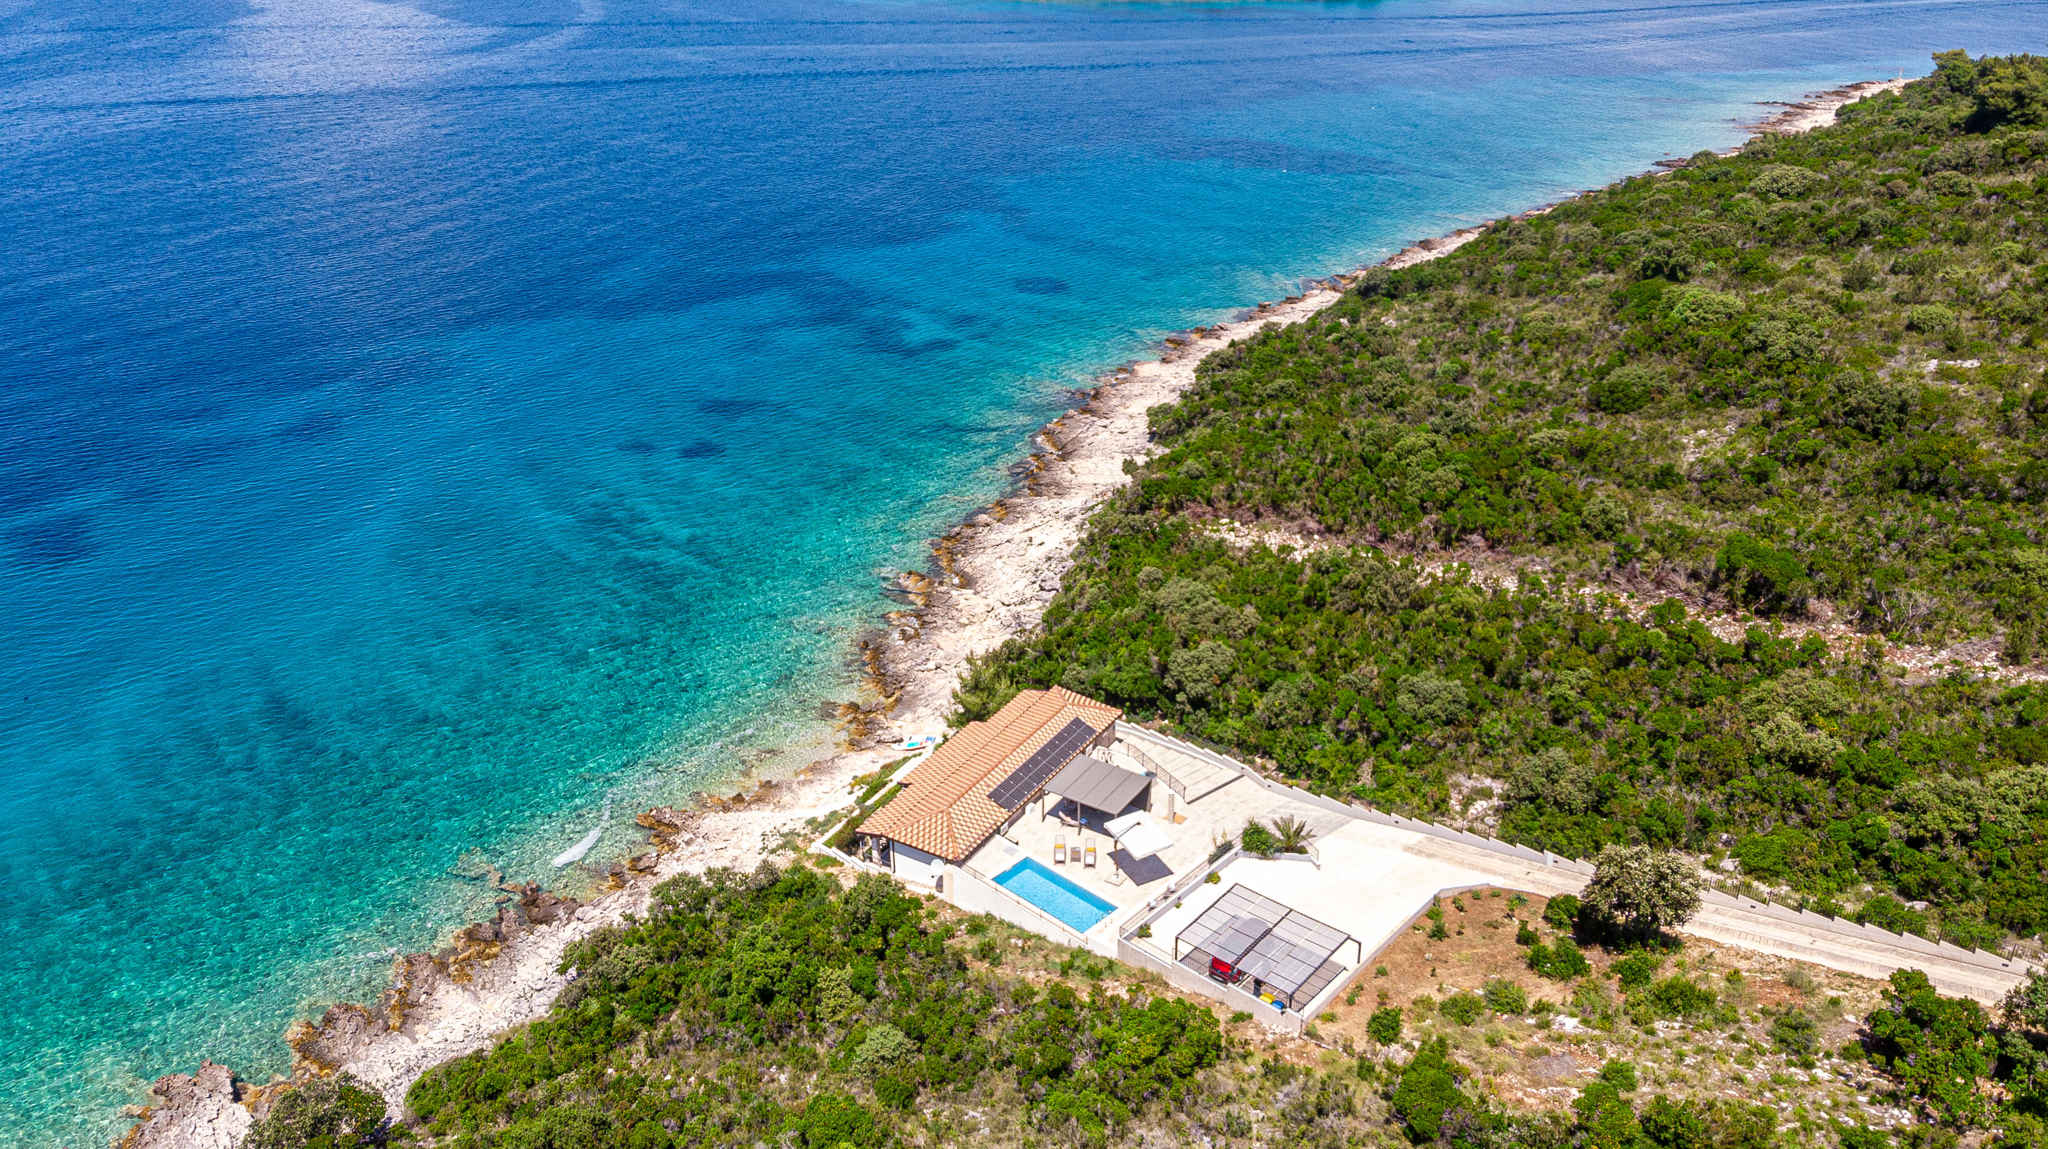 Villa direkt am Meer Ferienhaus in Kroatien